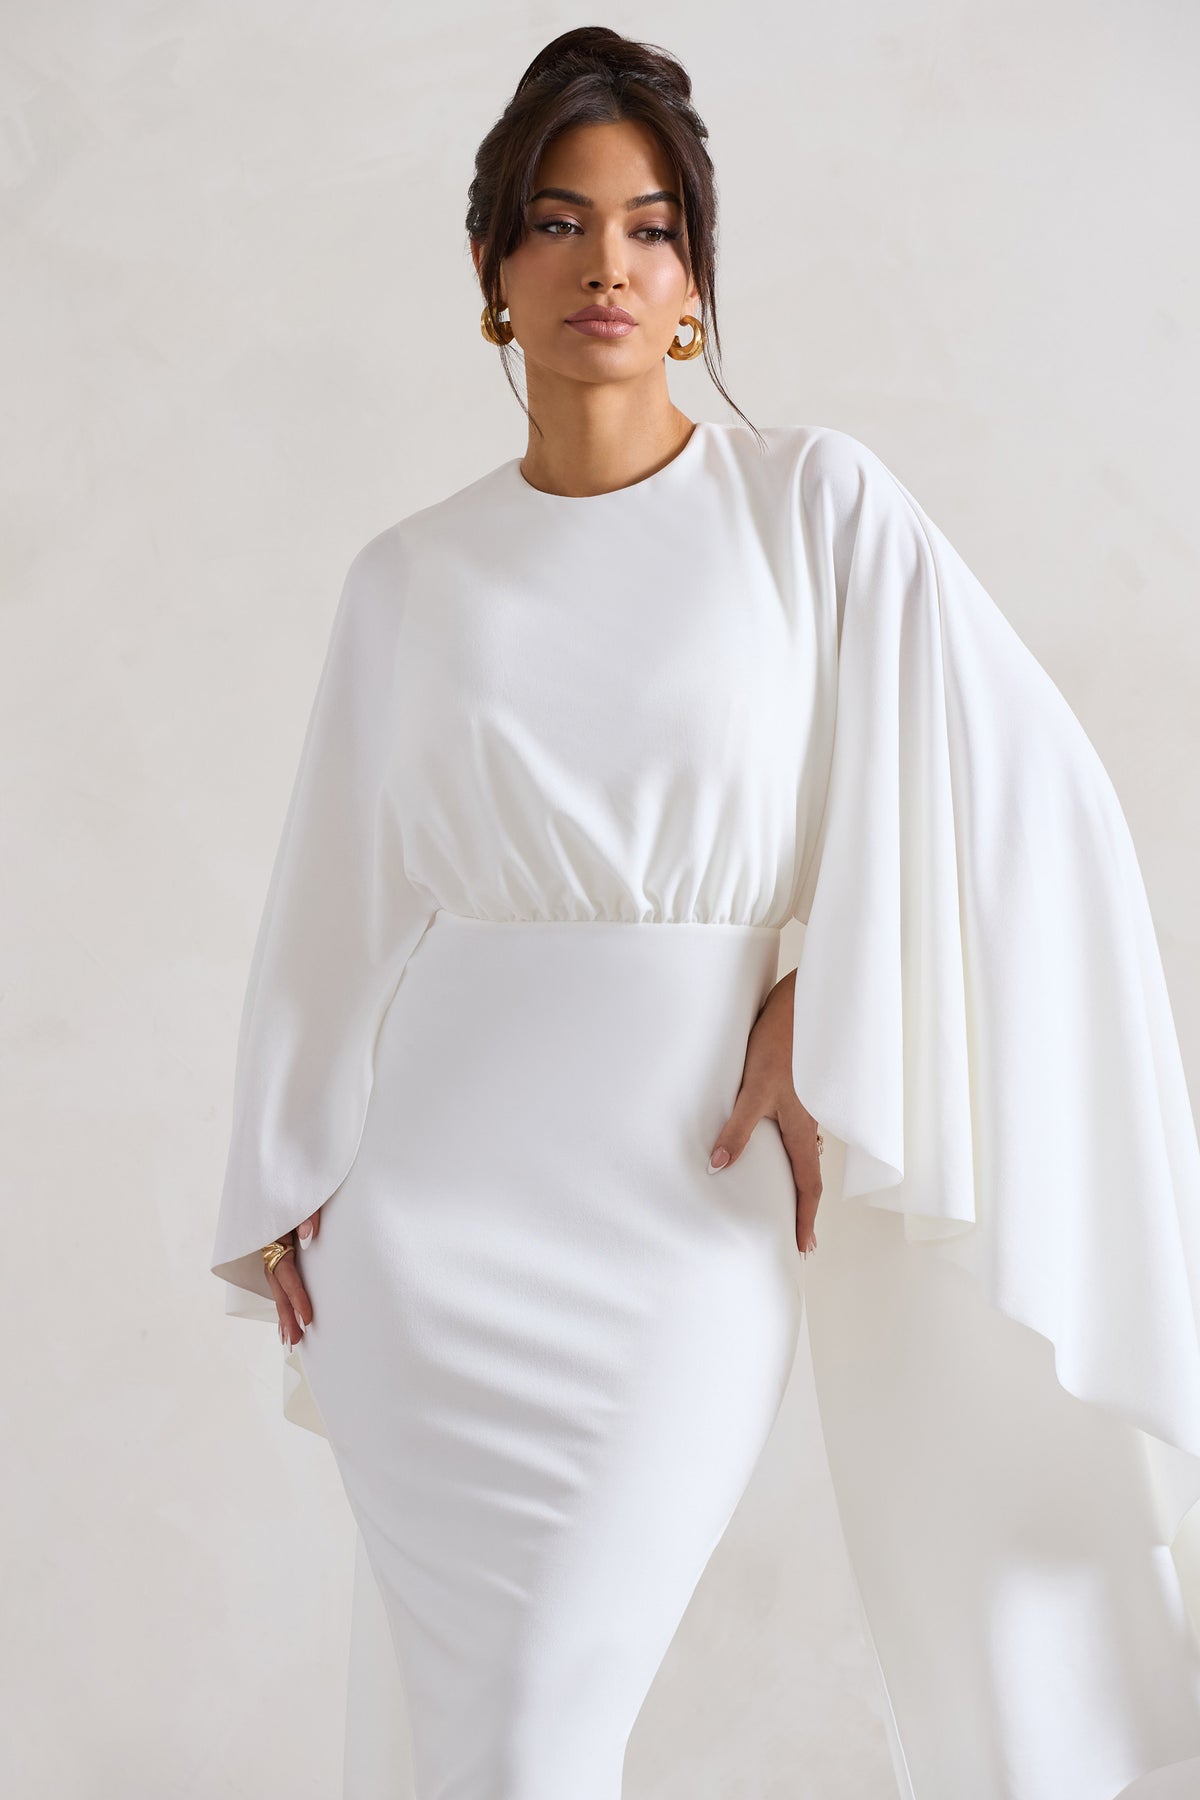 Tranquility White Gathered Midi Dress With Cape – Club L London - UK